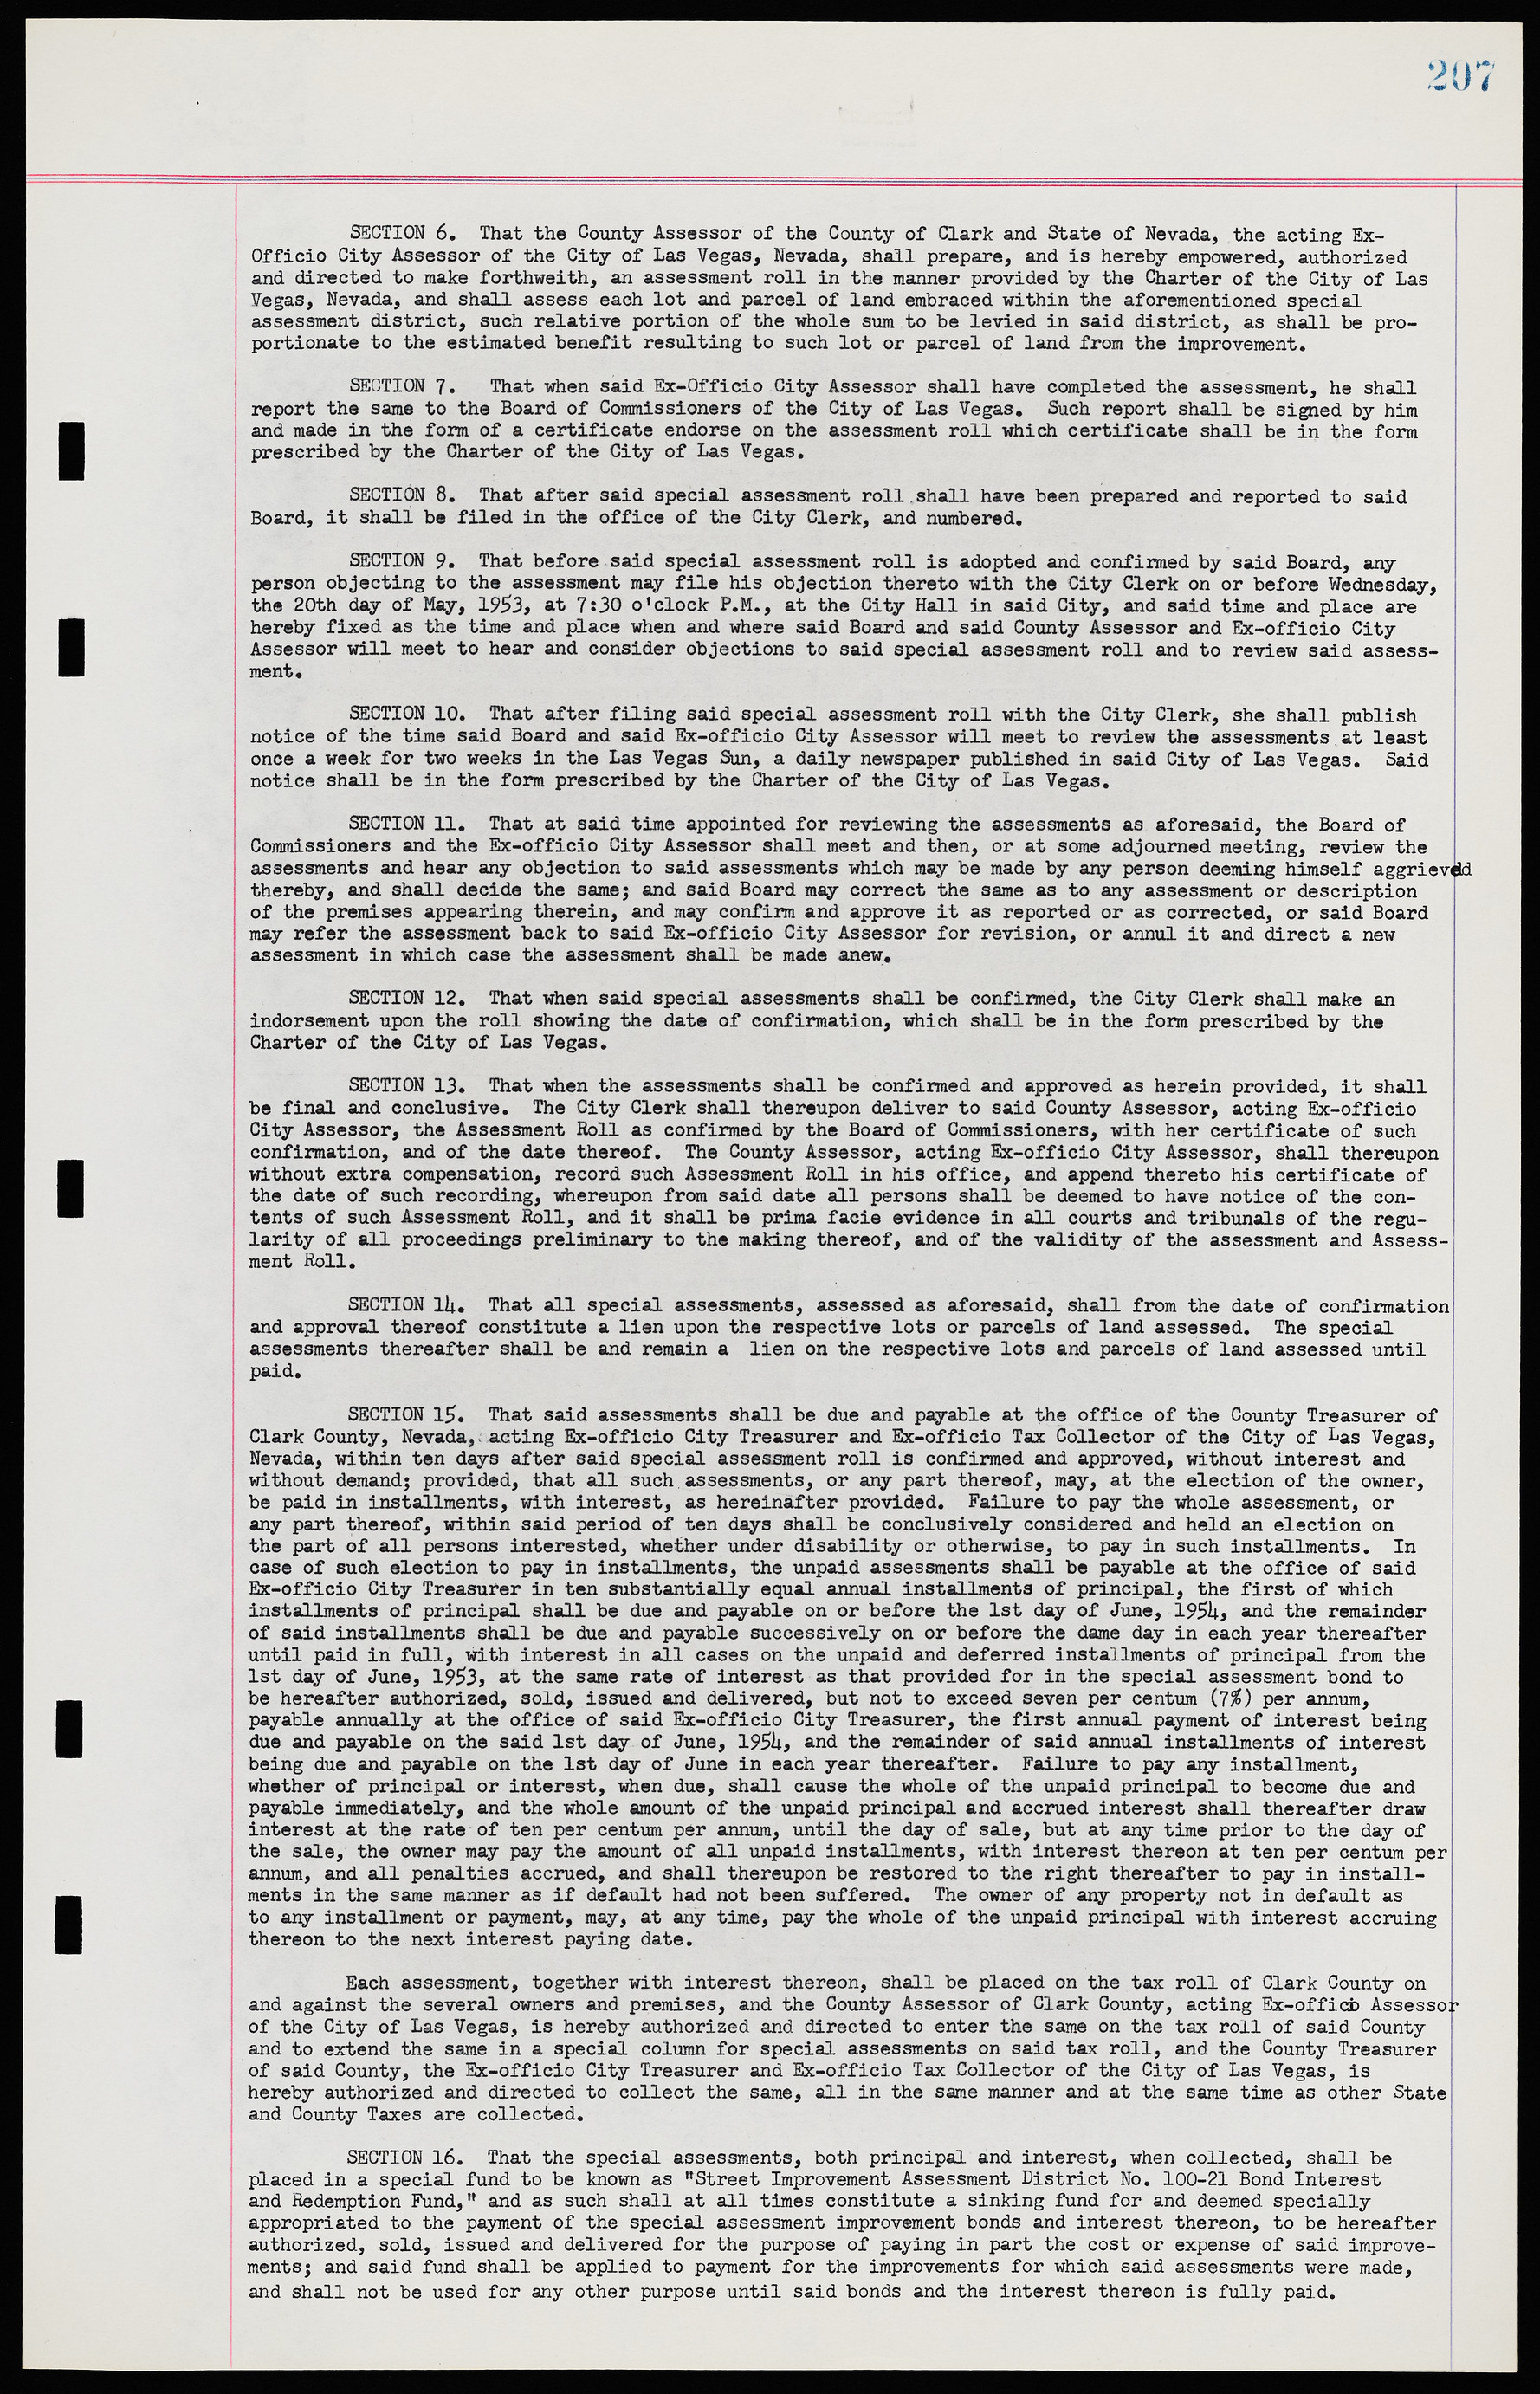 Las Vegas City Ordinances, November 13, 1950 to August 6, 1958, lvc000015-215